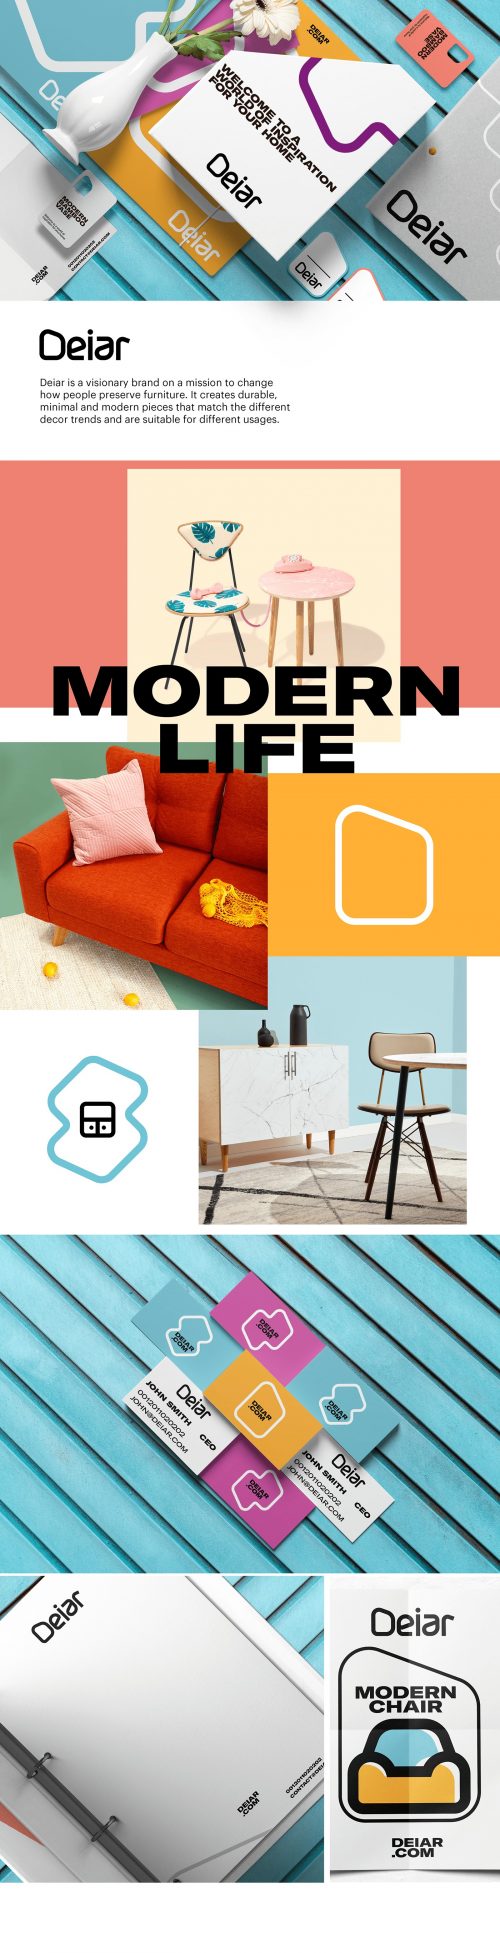 Deiar Home Furniture Interior Design Brand Identity Branding Design